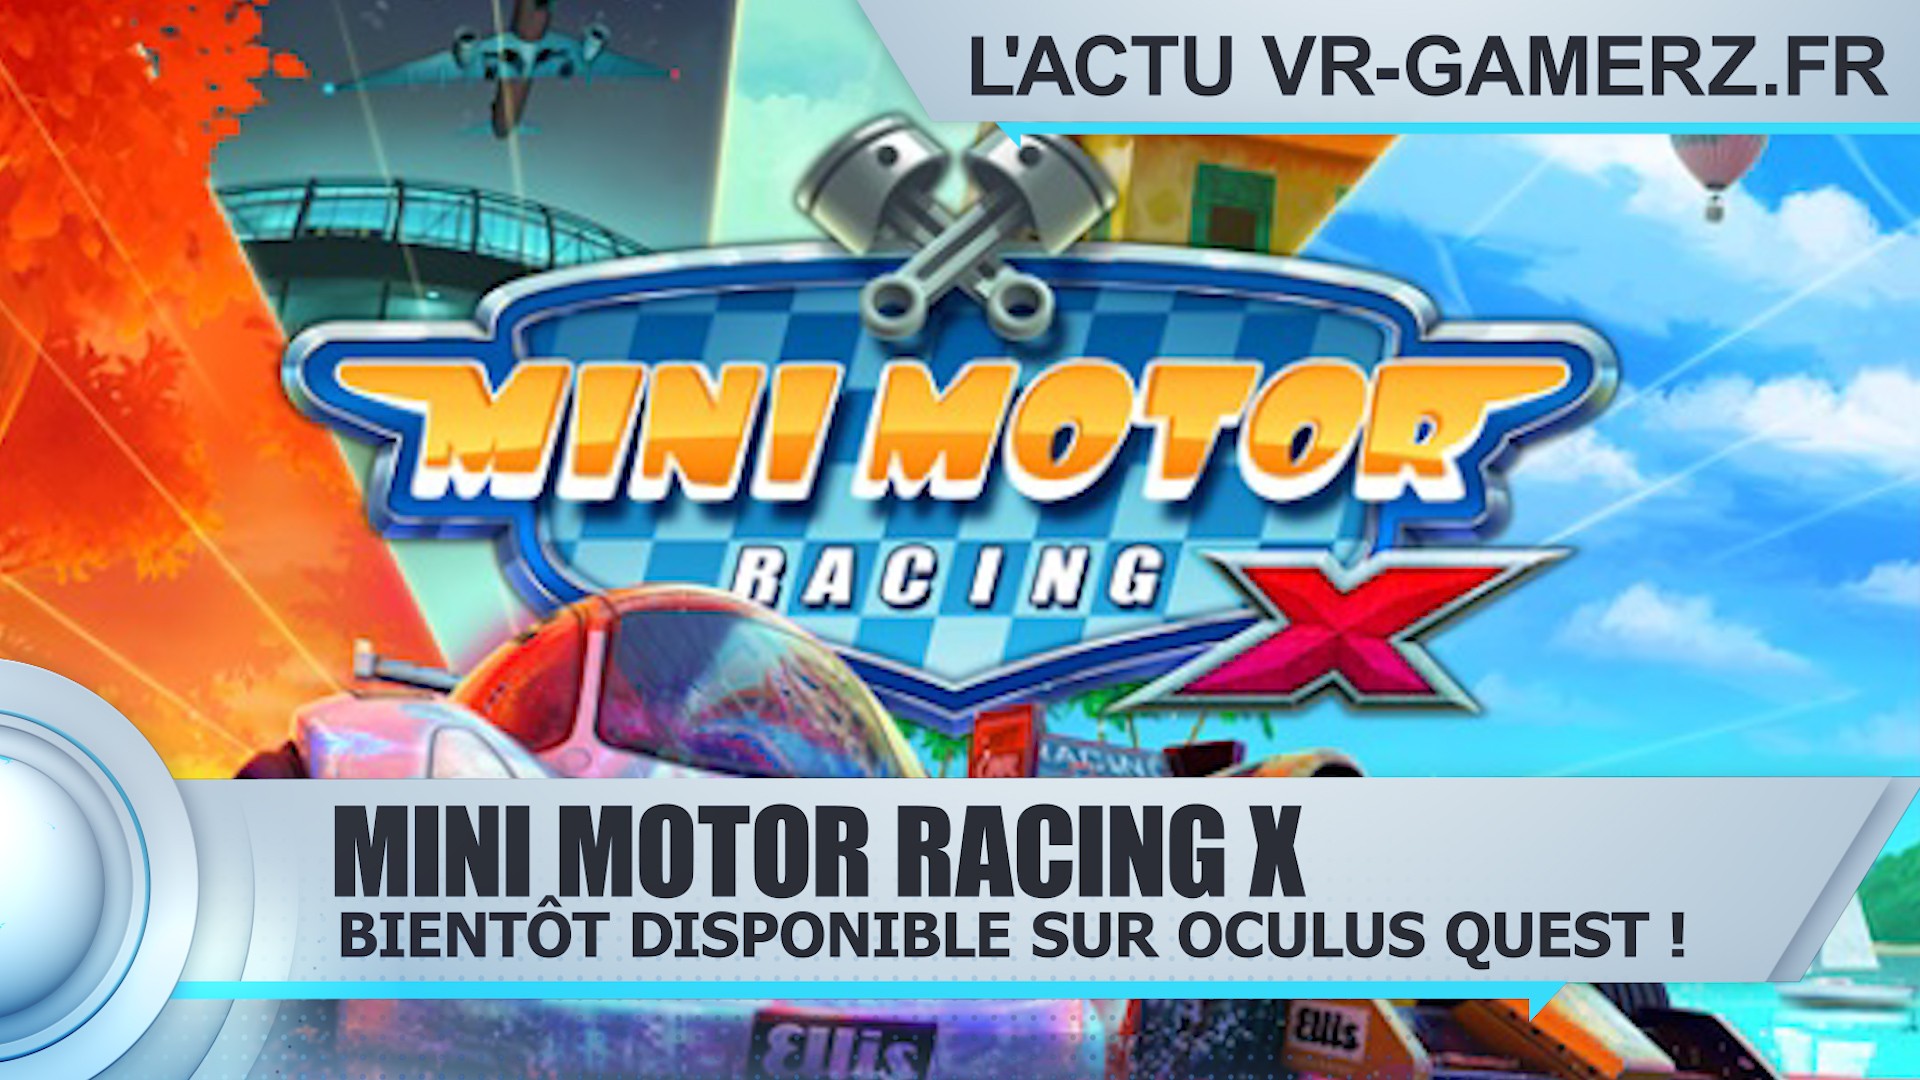 Mini Motor Racing X Oculus quest arrive bientôt !